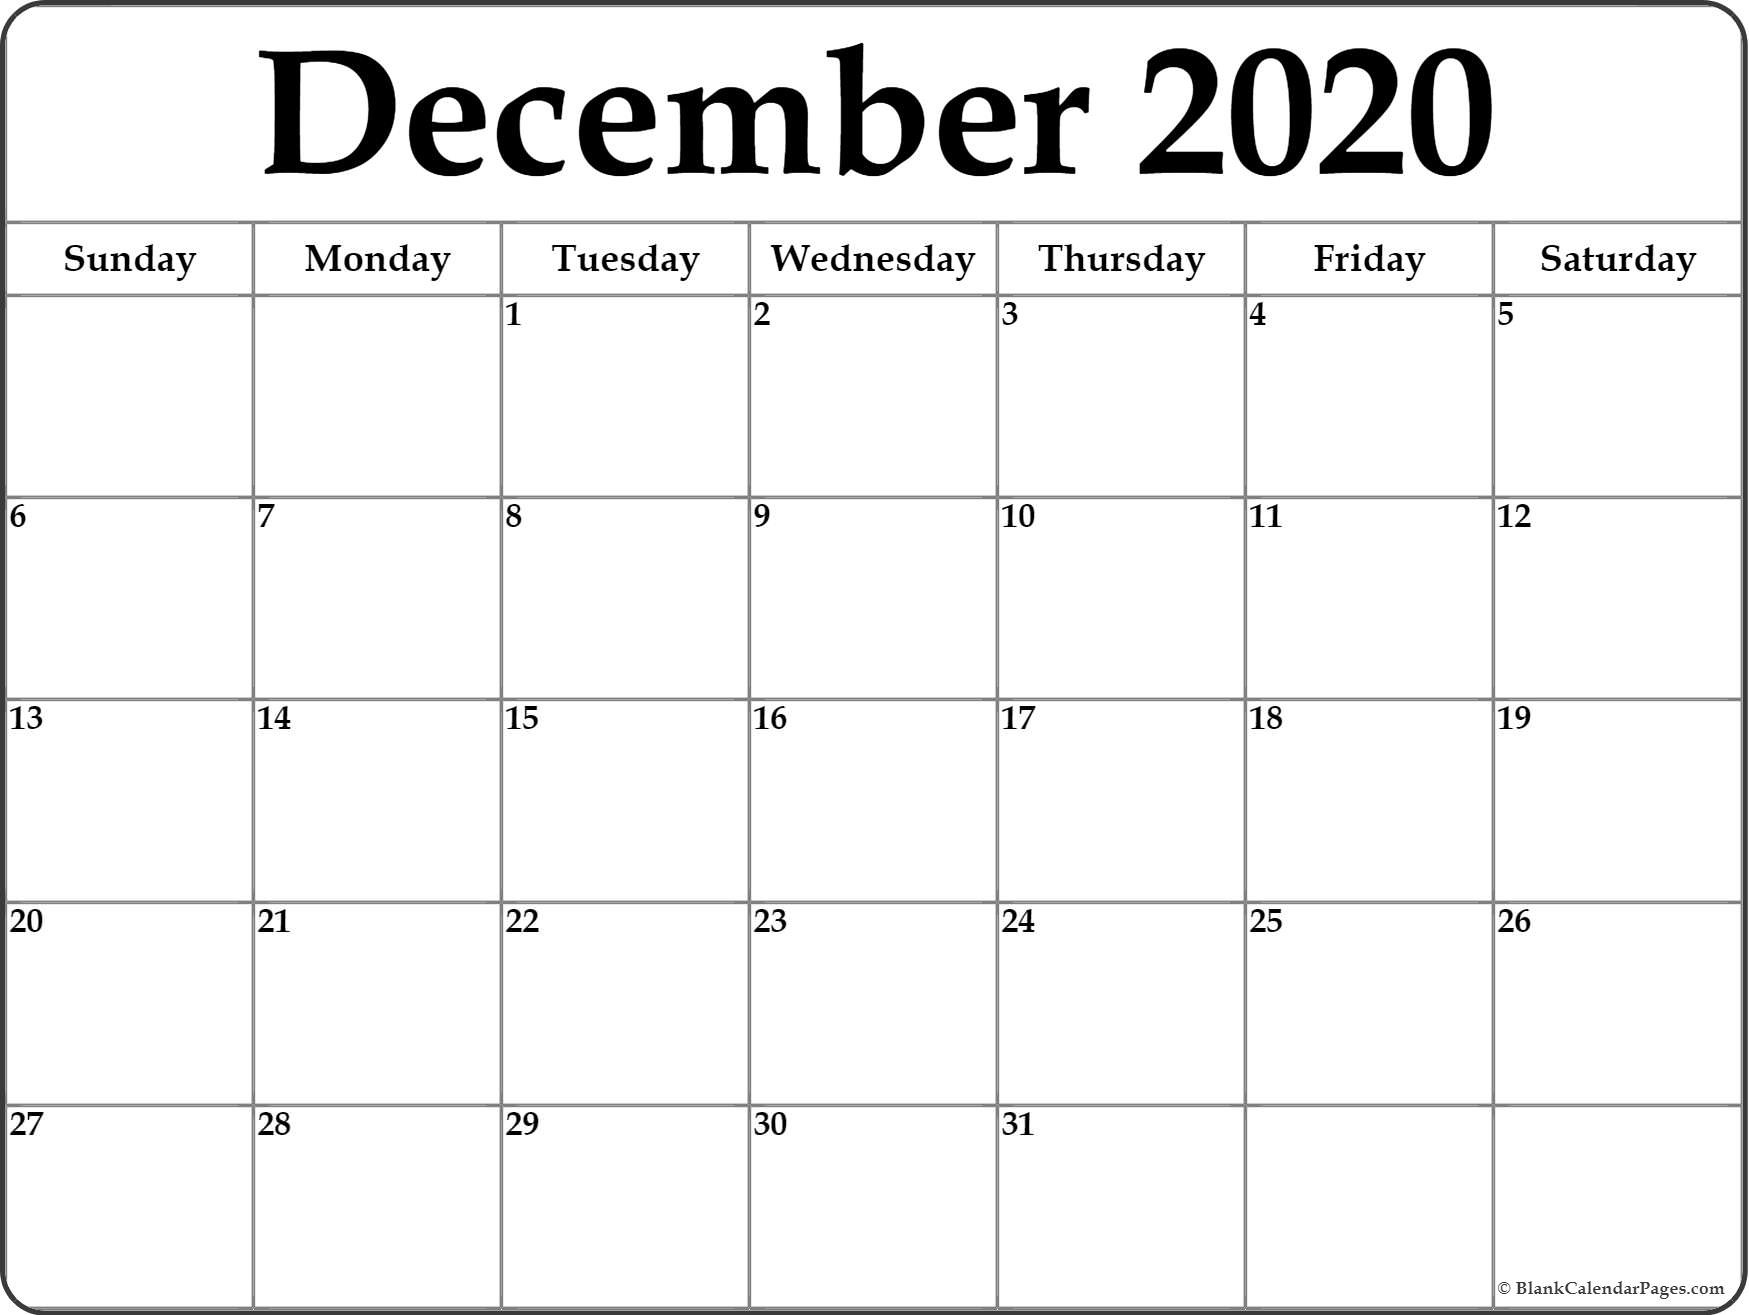 December 2020 Calendar | Free Printable Monthly Calendars-2020 Monthly Calendar Template August Thru December